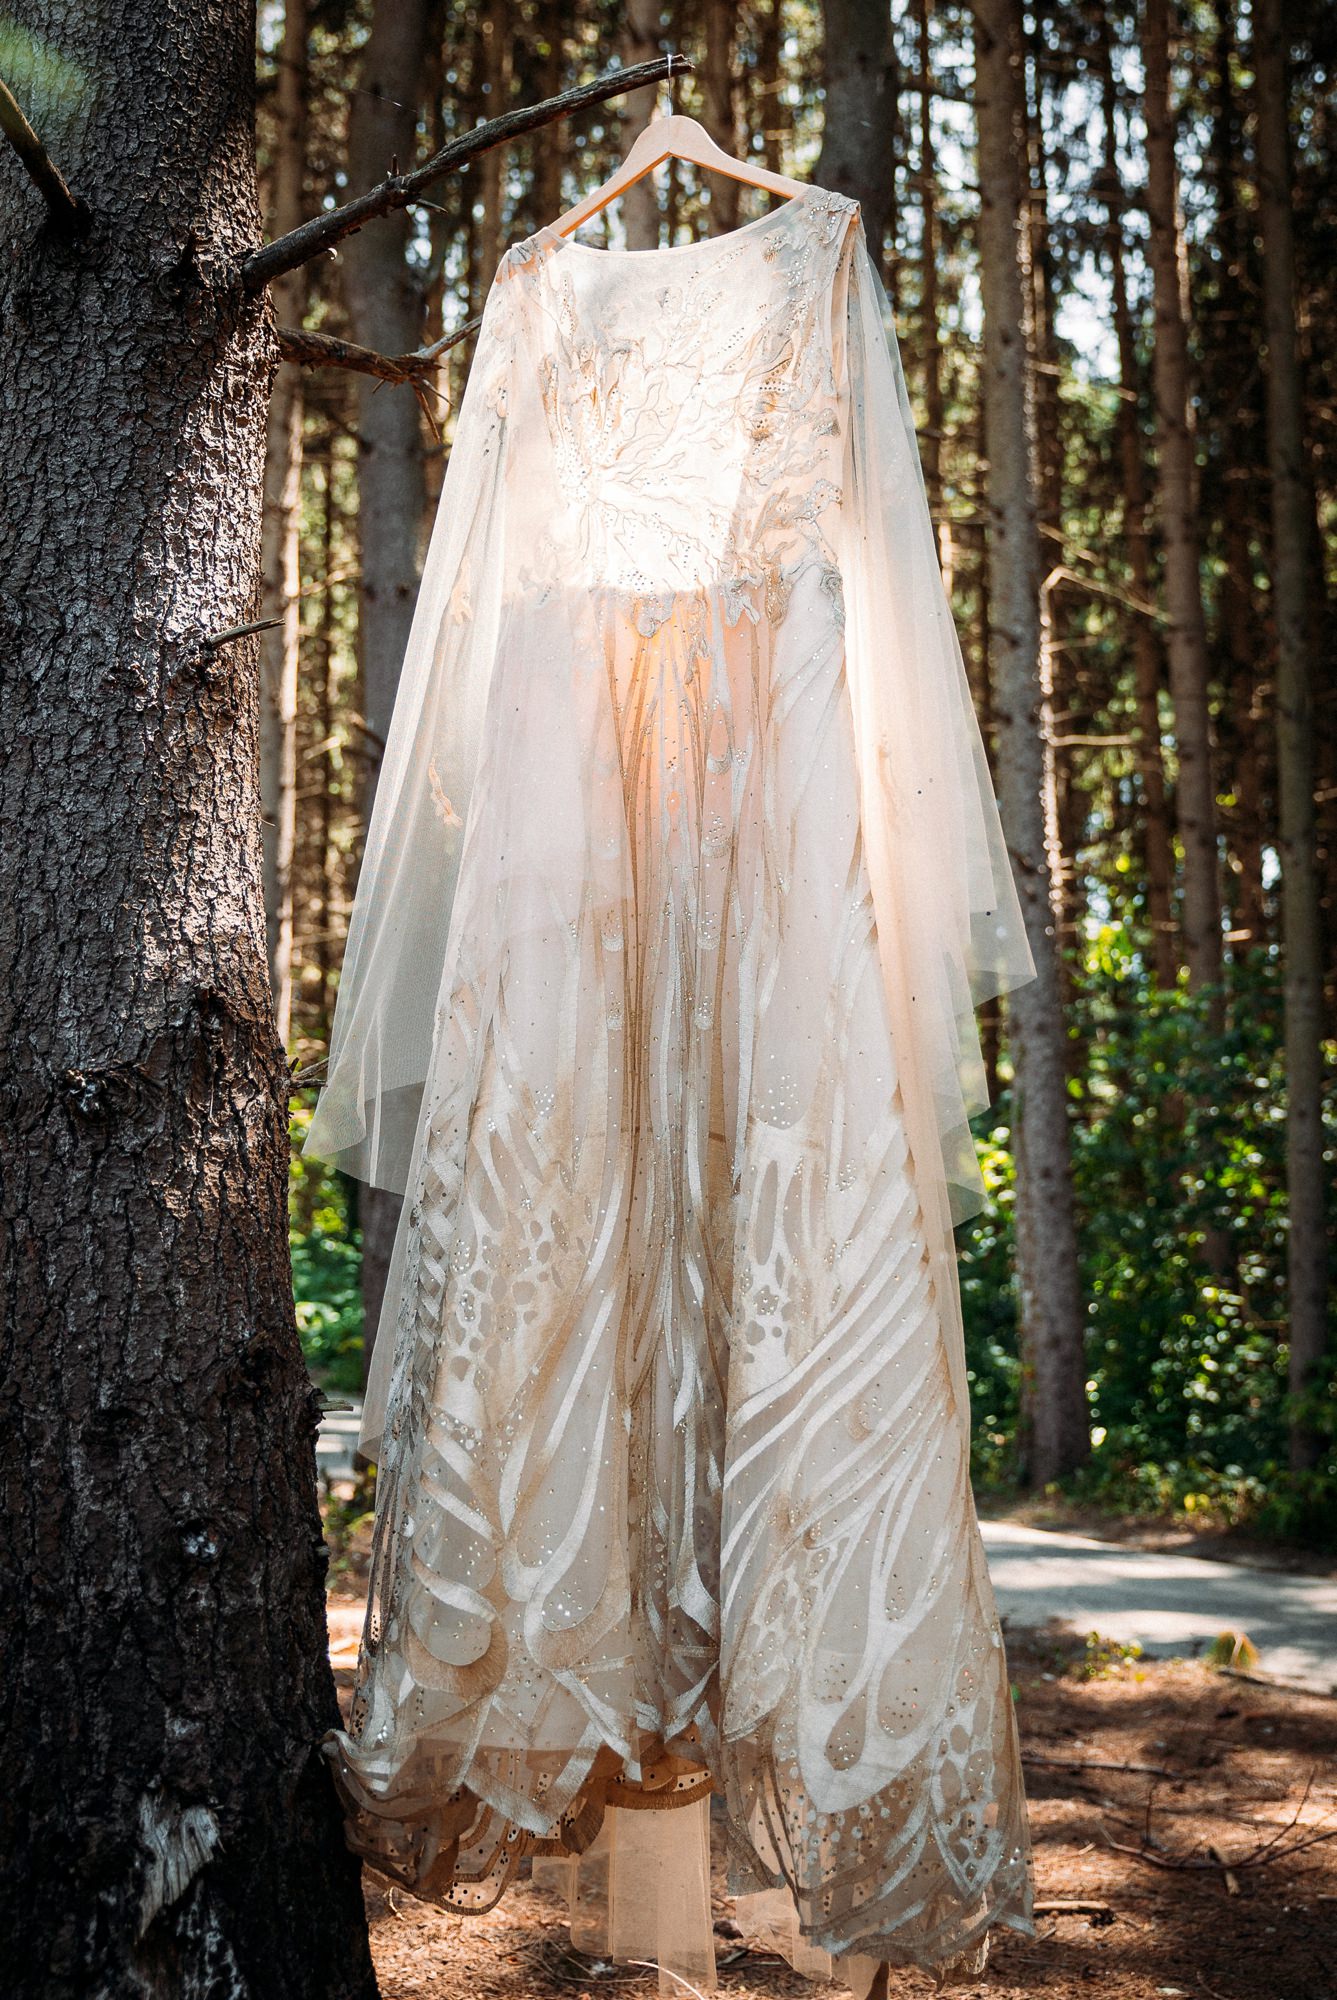 Wedding dress hanging from tree